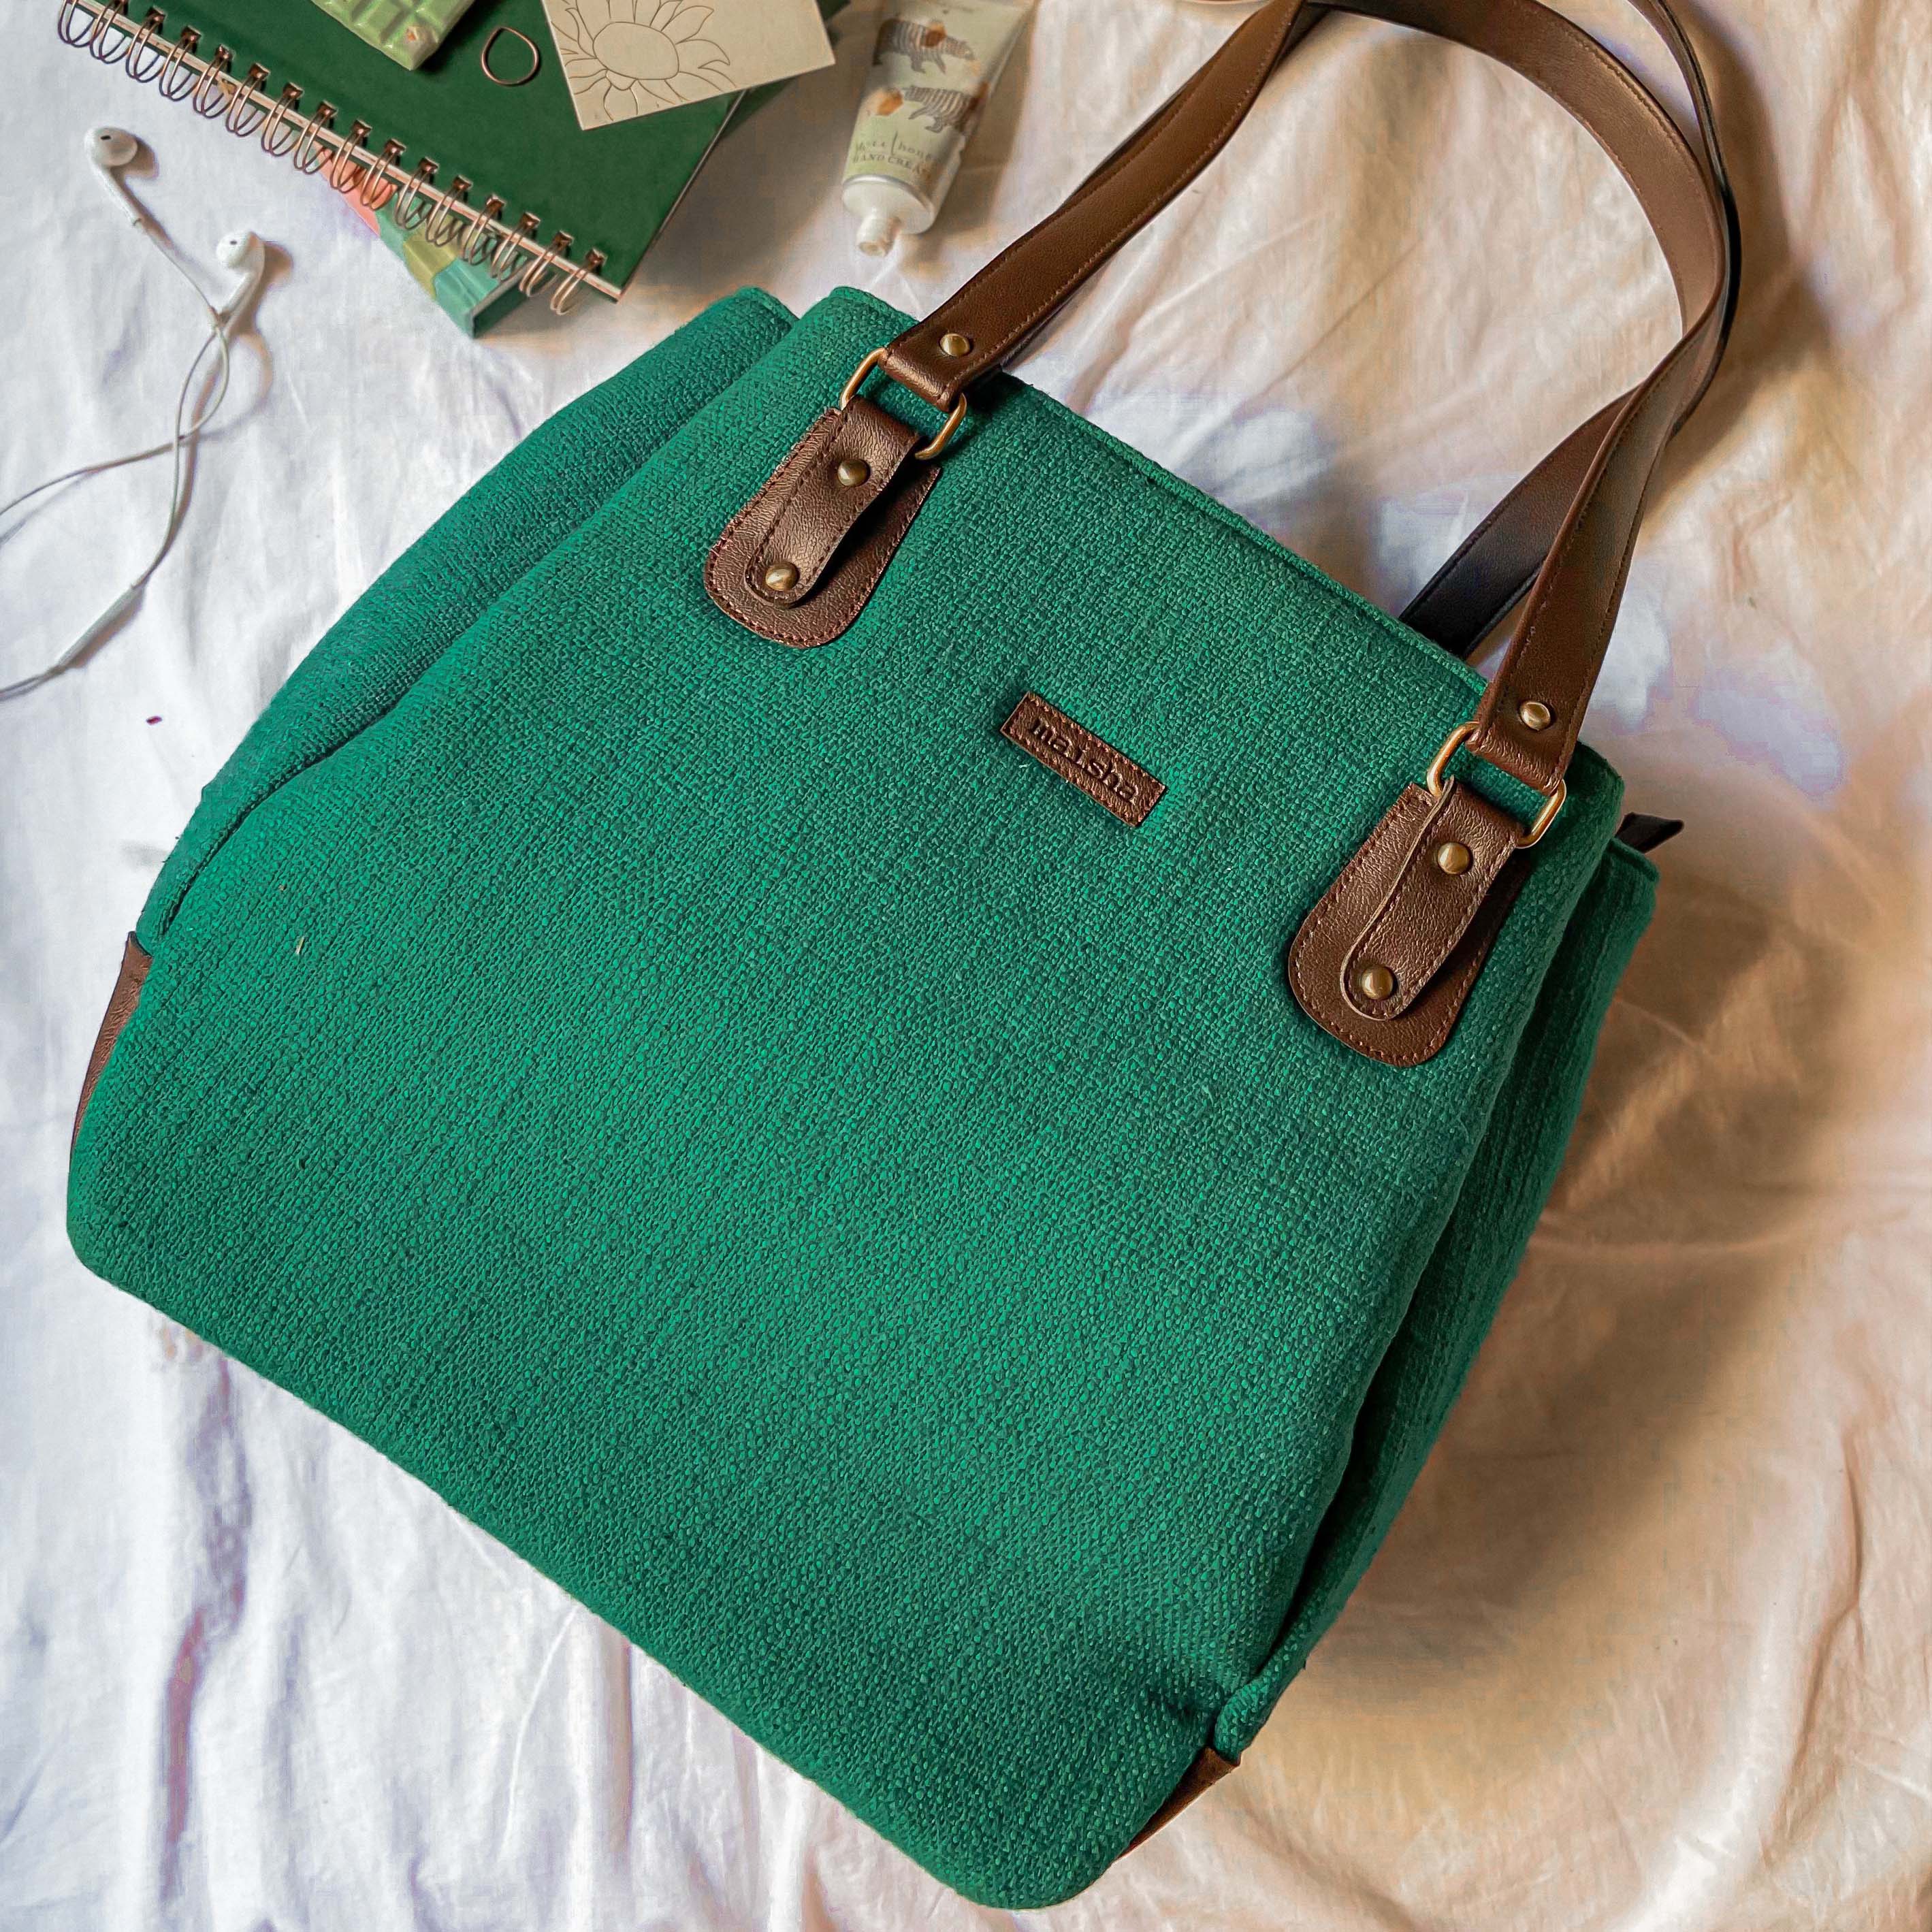 Rosetti Handbags, Reusable Shopping Bags + Luggage - Sherwood Auctions